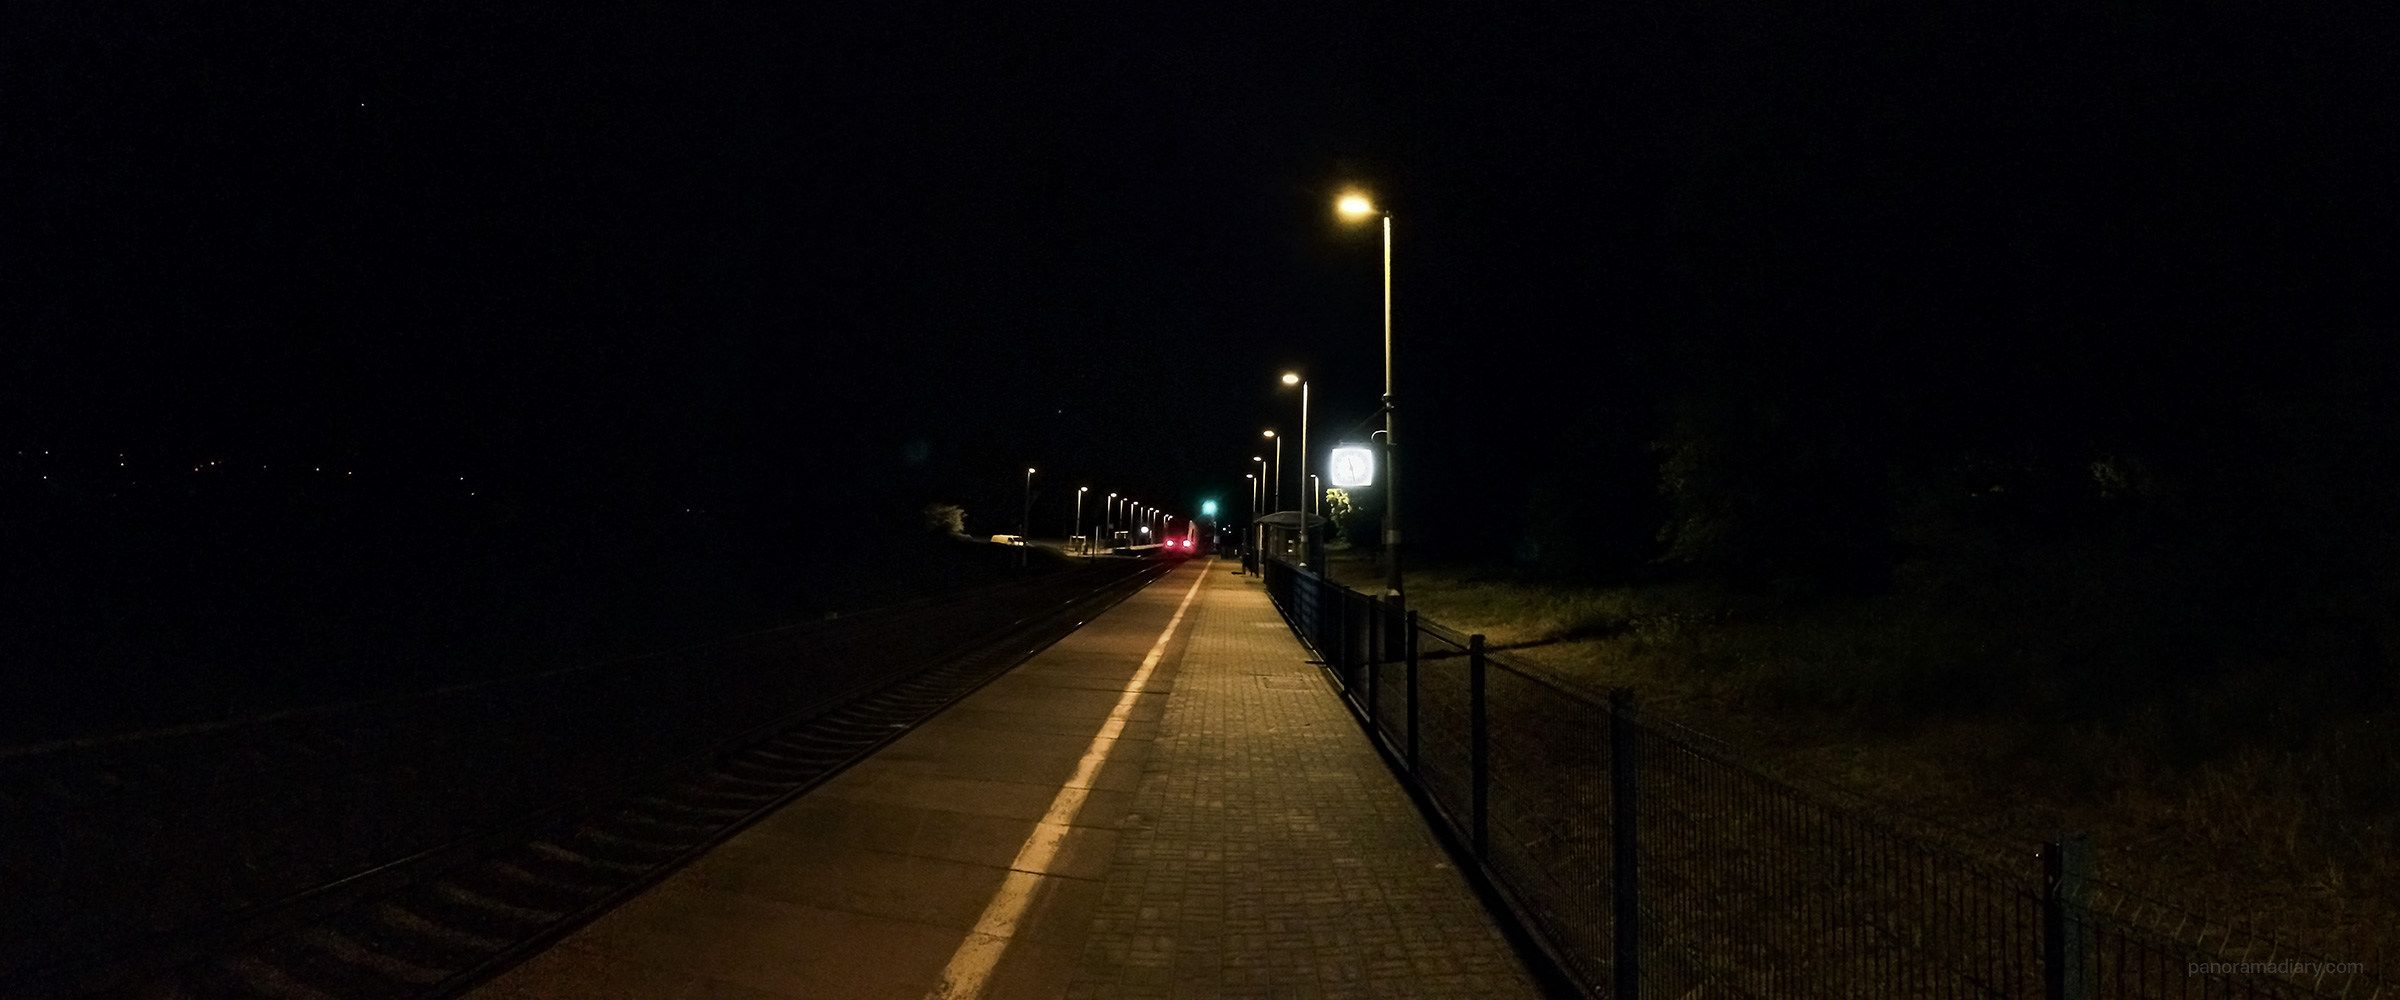 PANORAMA DIARY | Iphoneography blog | Lasów train station